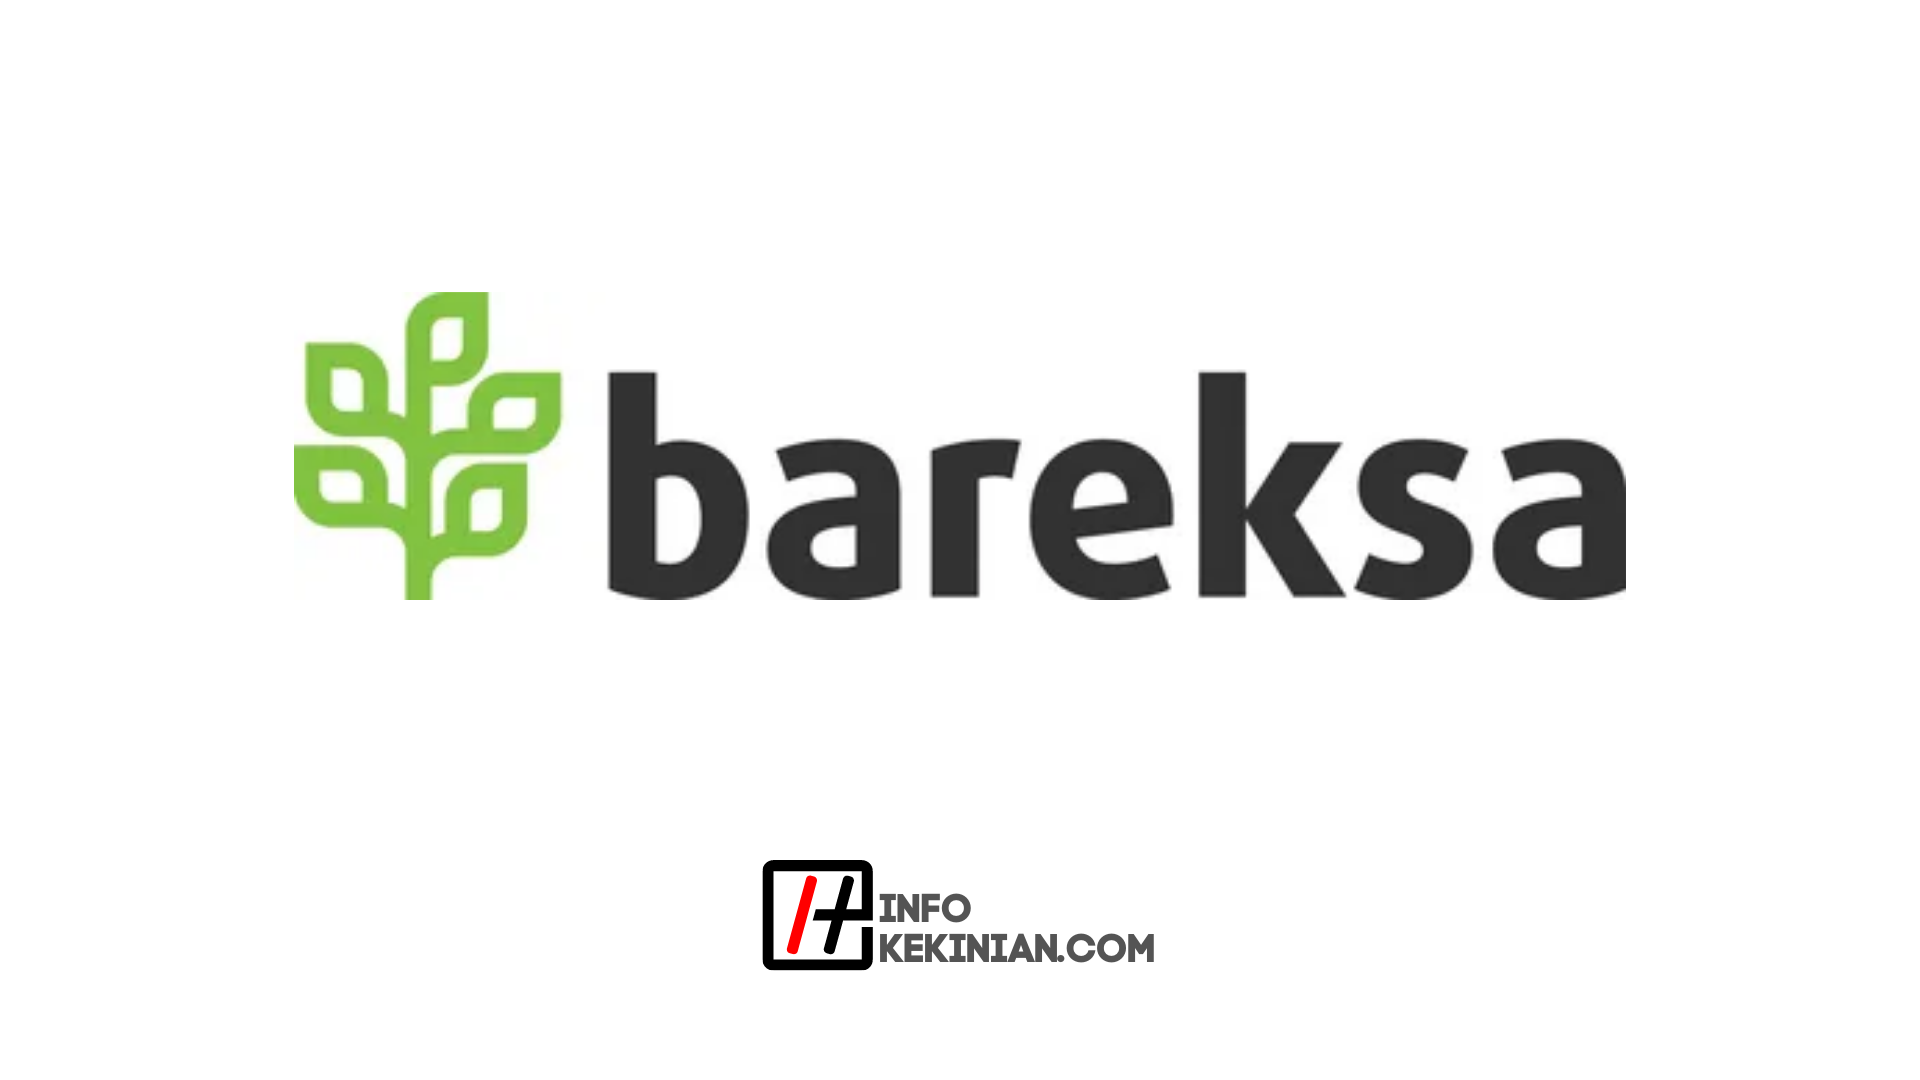 L'application Bareksa et son utilisation